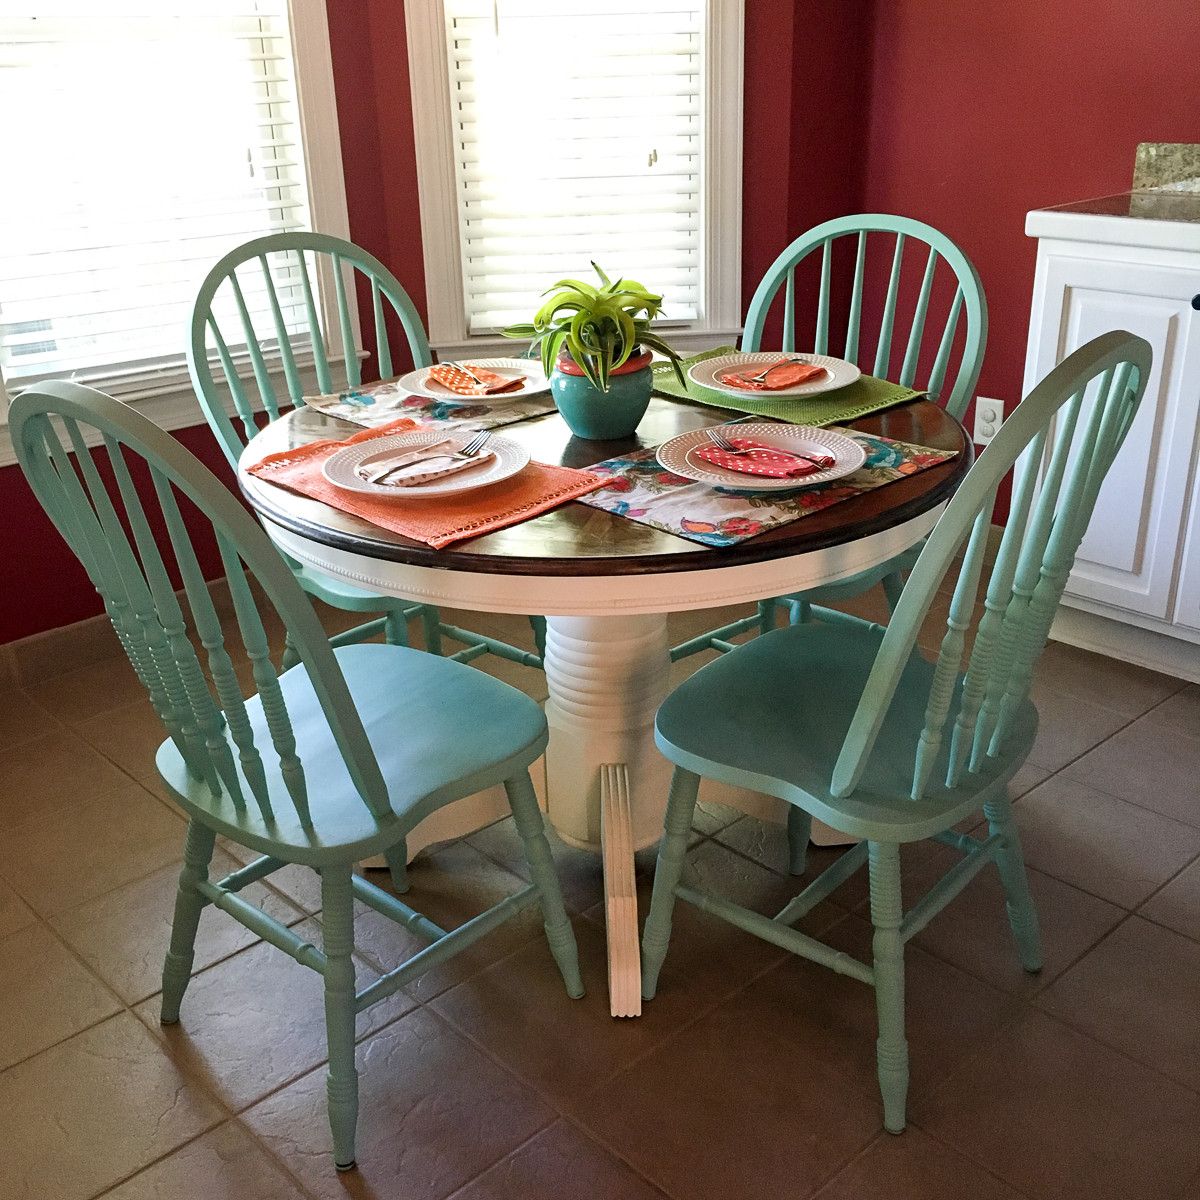 Round White Kitchen Table Set
 Turquoise and White Kitchen Table Round Table The